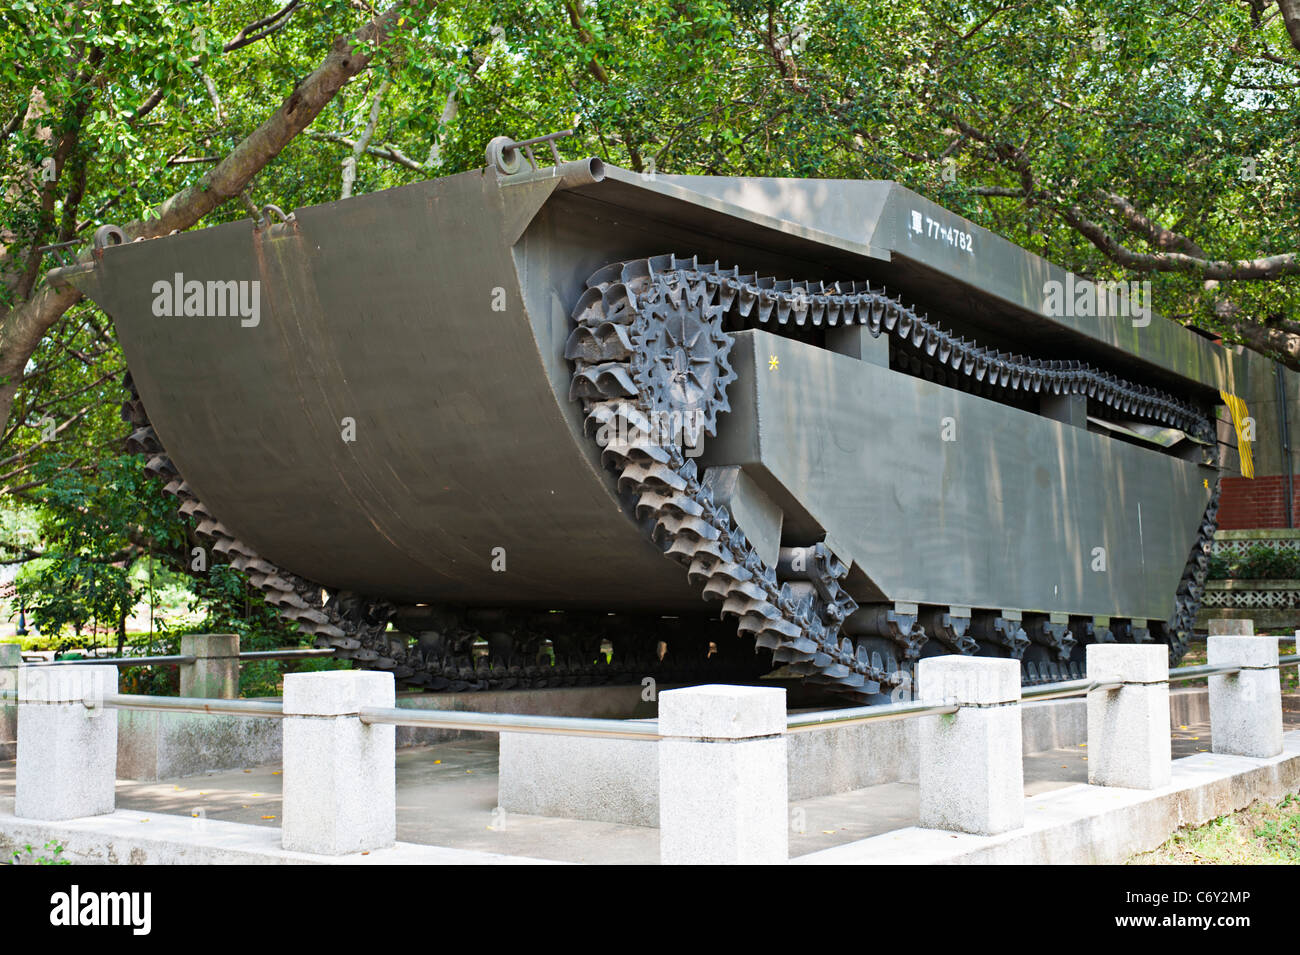 LVT-P4 Landing Craft, 823 Artillery Battle War Museum, Kinmen National Park, Kinmen, Taiwan Stock Photo